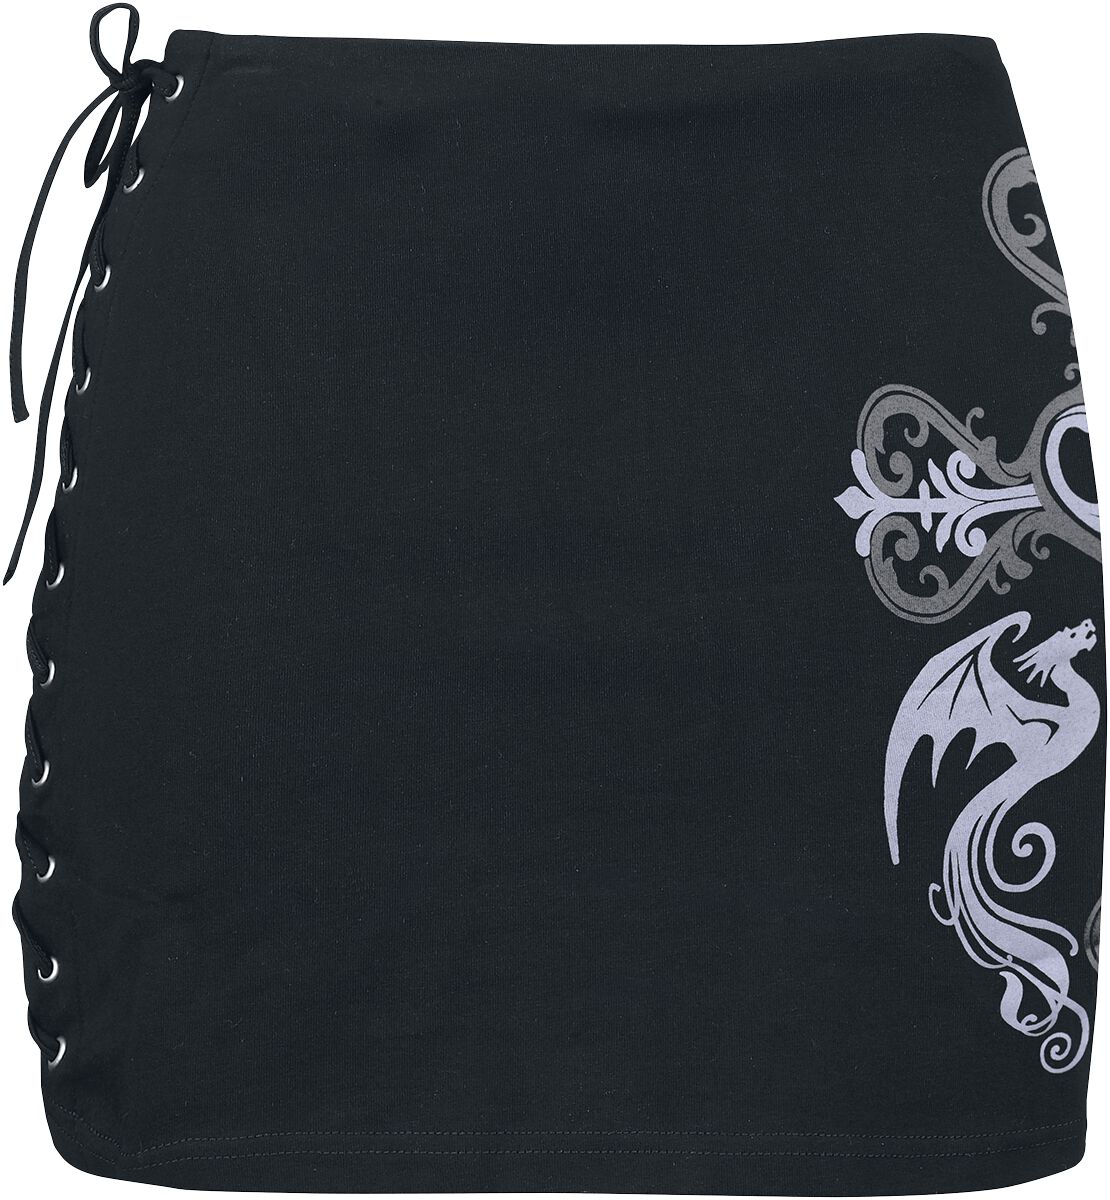 Gothicana by EMP - Gothic Kurzer Rock - Gothicana X Anne Stokes - Skirt With Lacing And Lace - XS bis XXL - für Damen - Größe L - schwarz